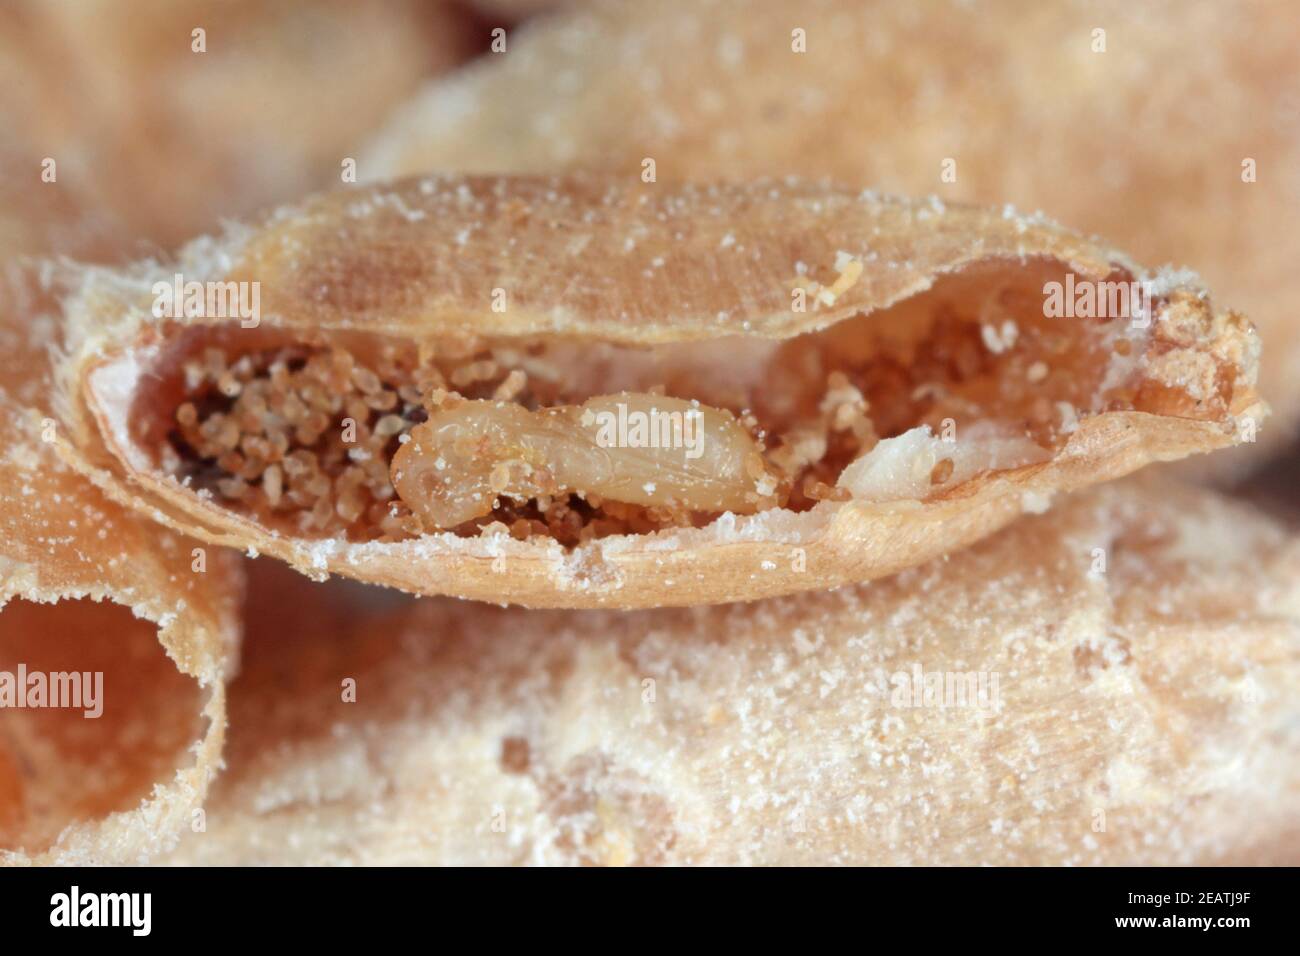 Pupa of wasp from family Bethylidae parasitizing on Rhyzopertha dominica (lesser grain borer) inside damaged grain. Stock Photo